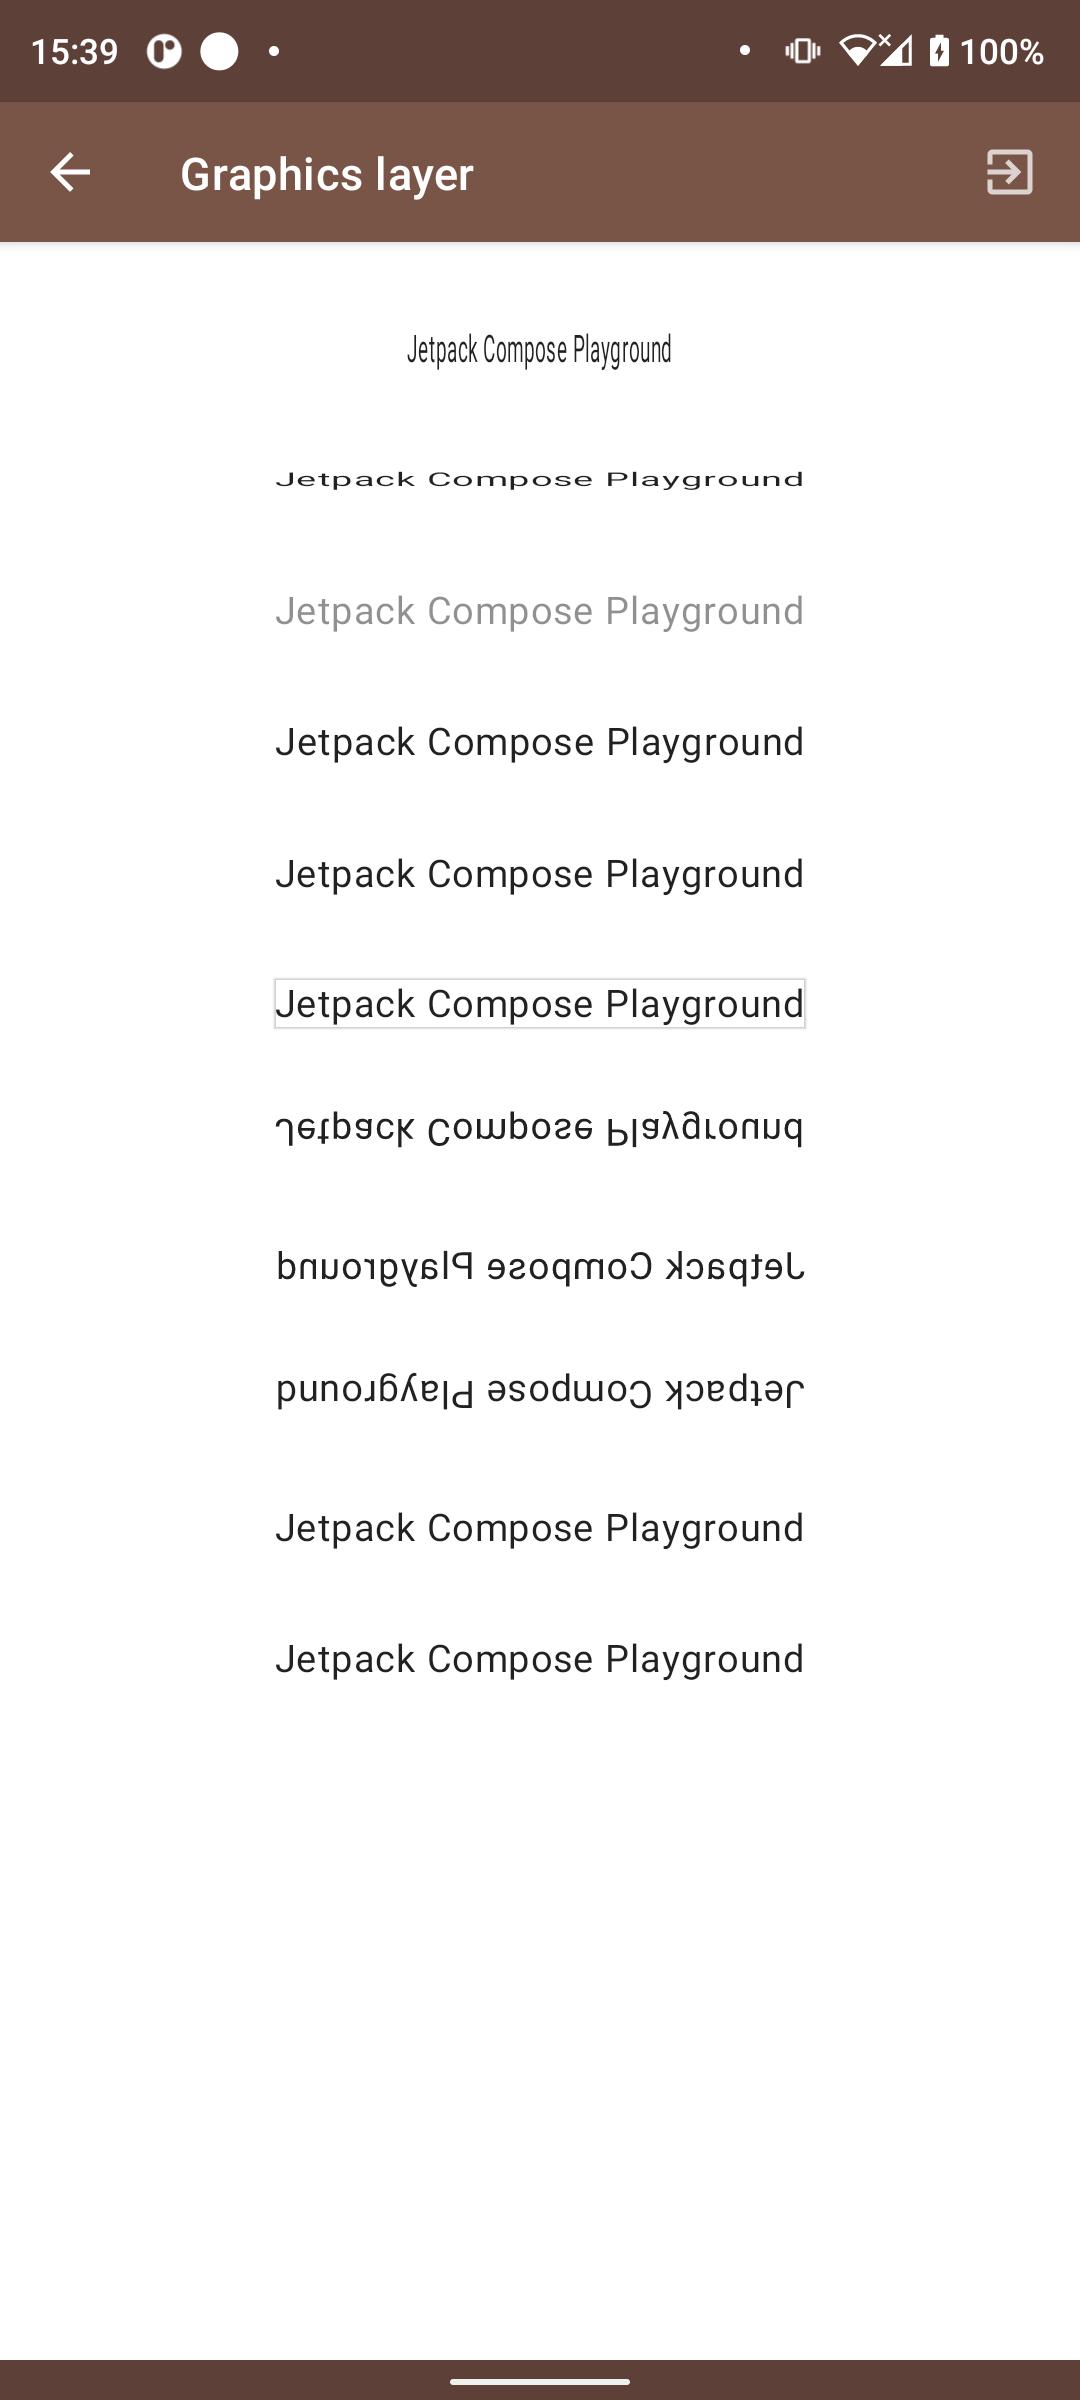 Jetpack Compose Playground 4.0.0 Screenshot 4